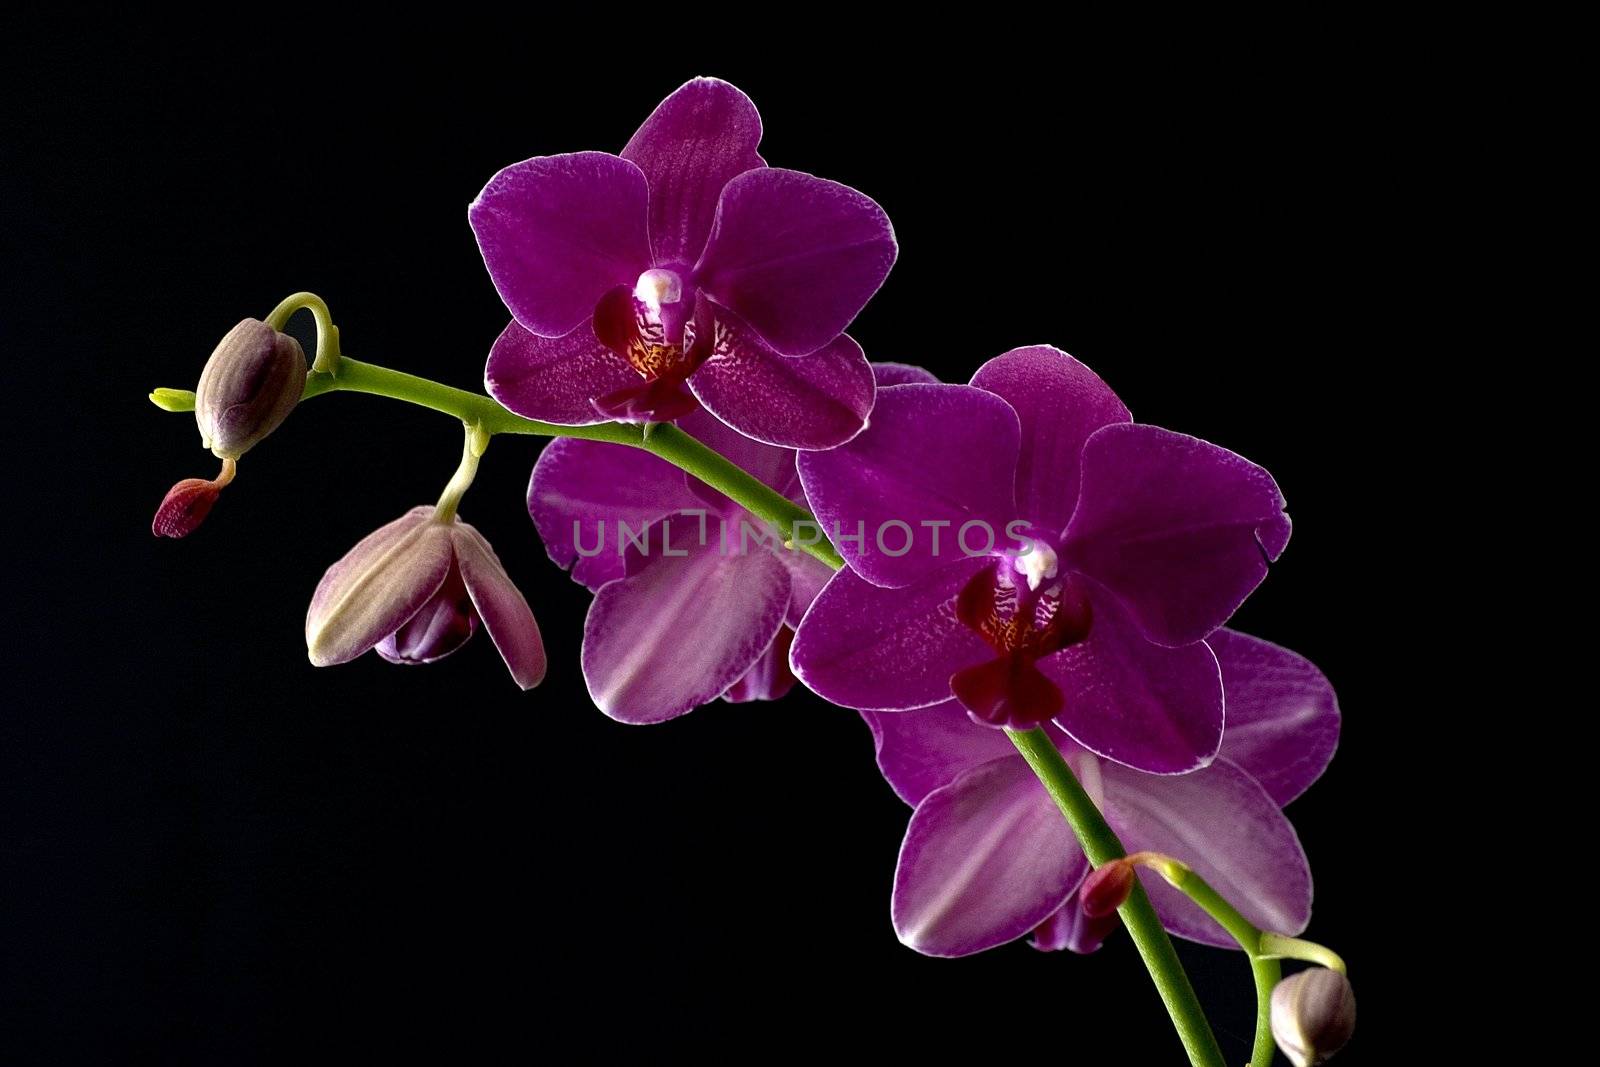 Four Orchids by miradrozdowski